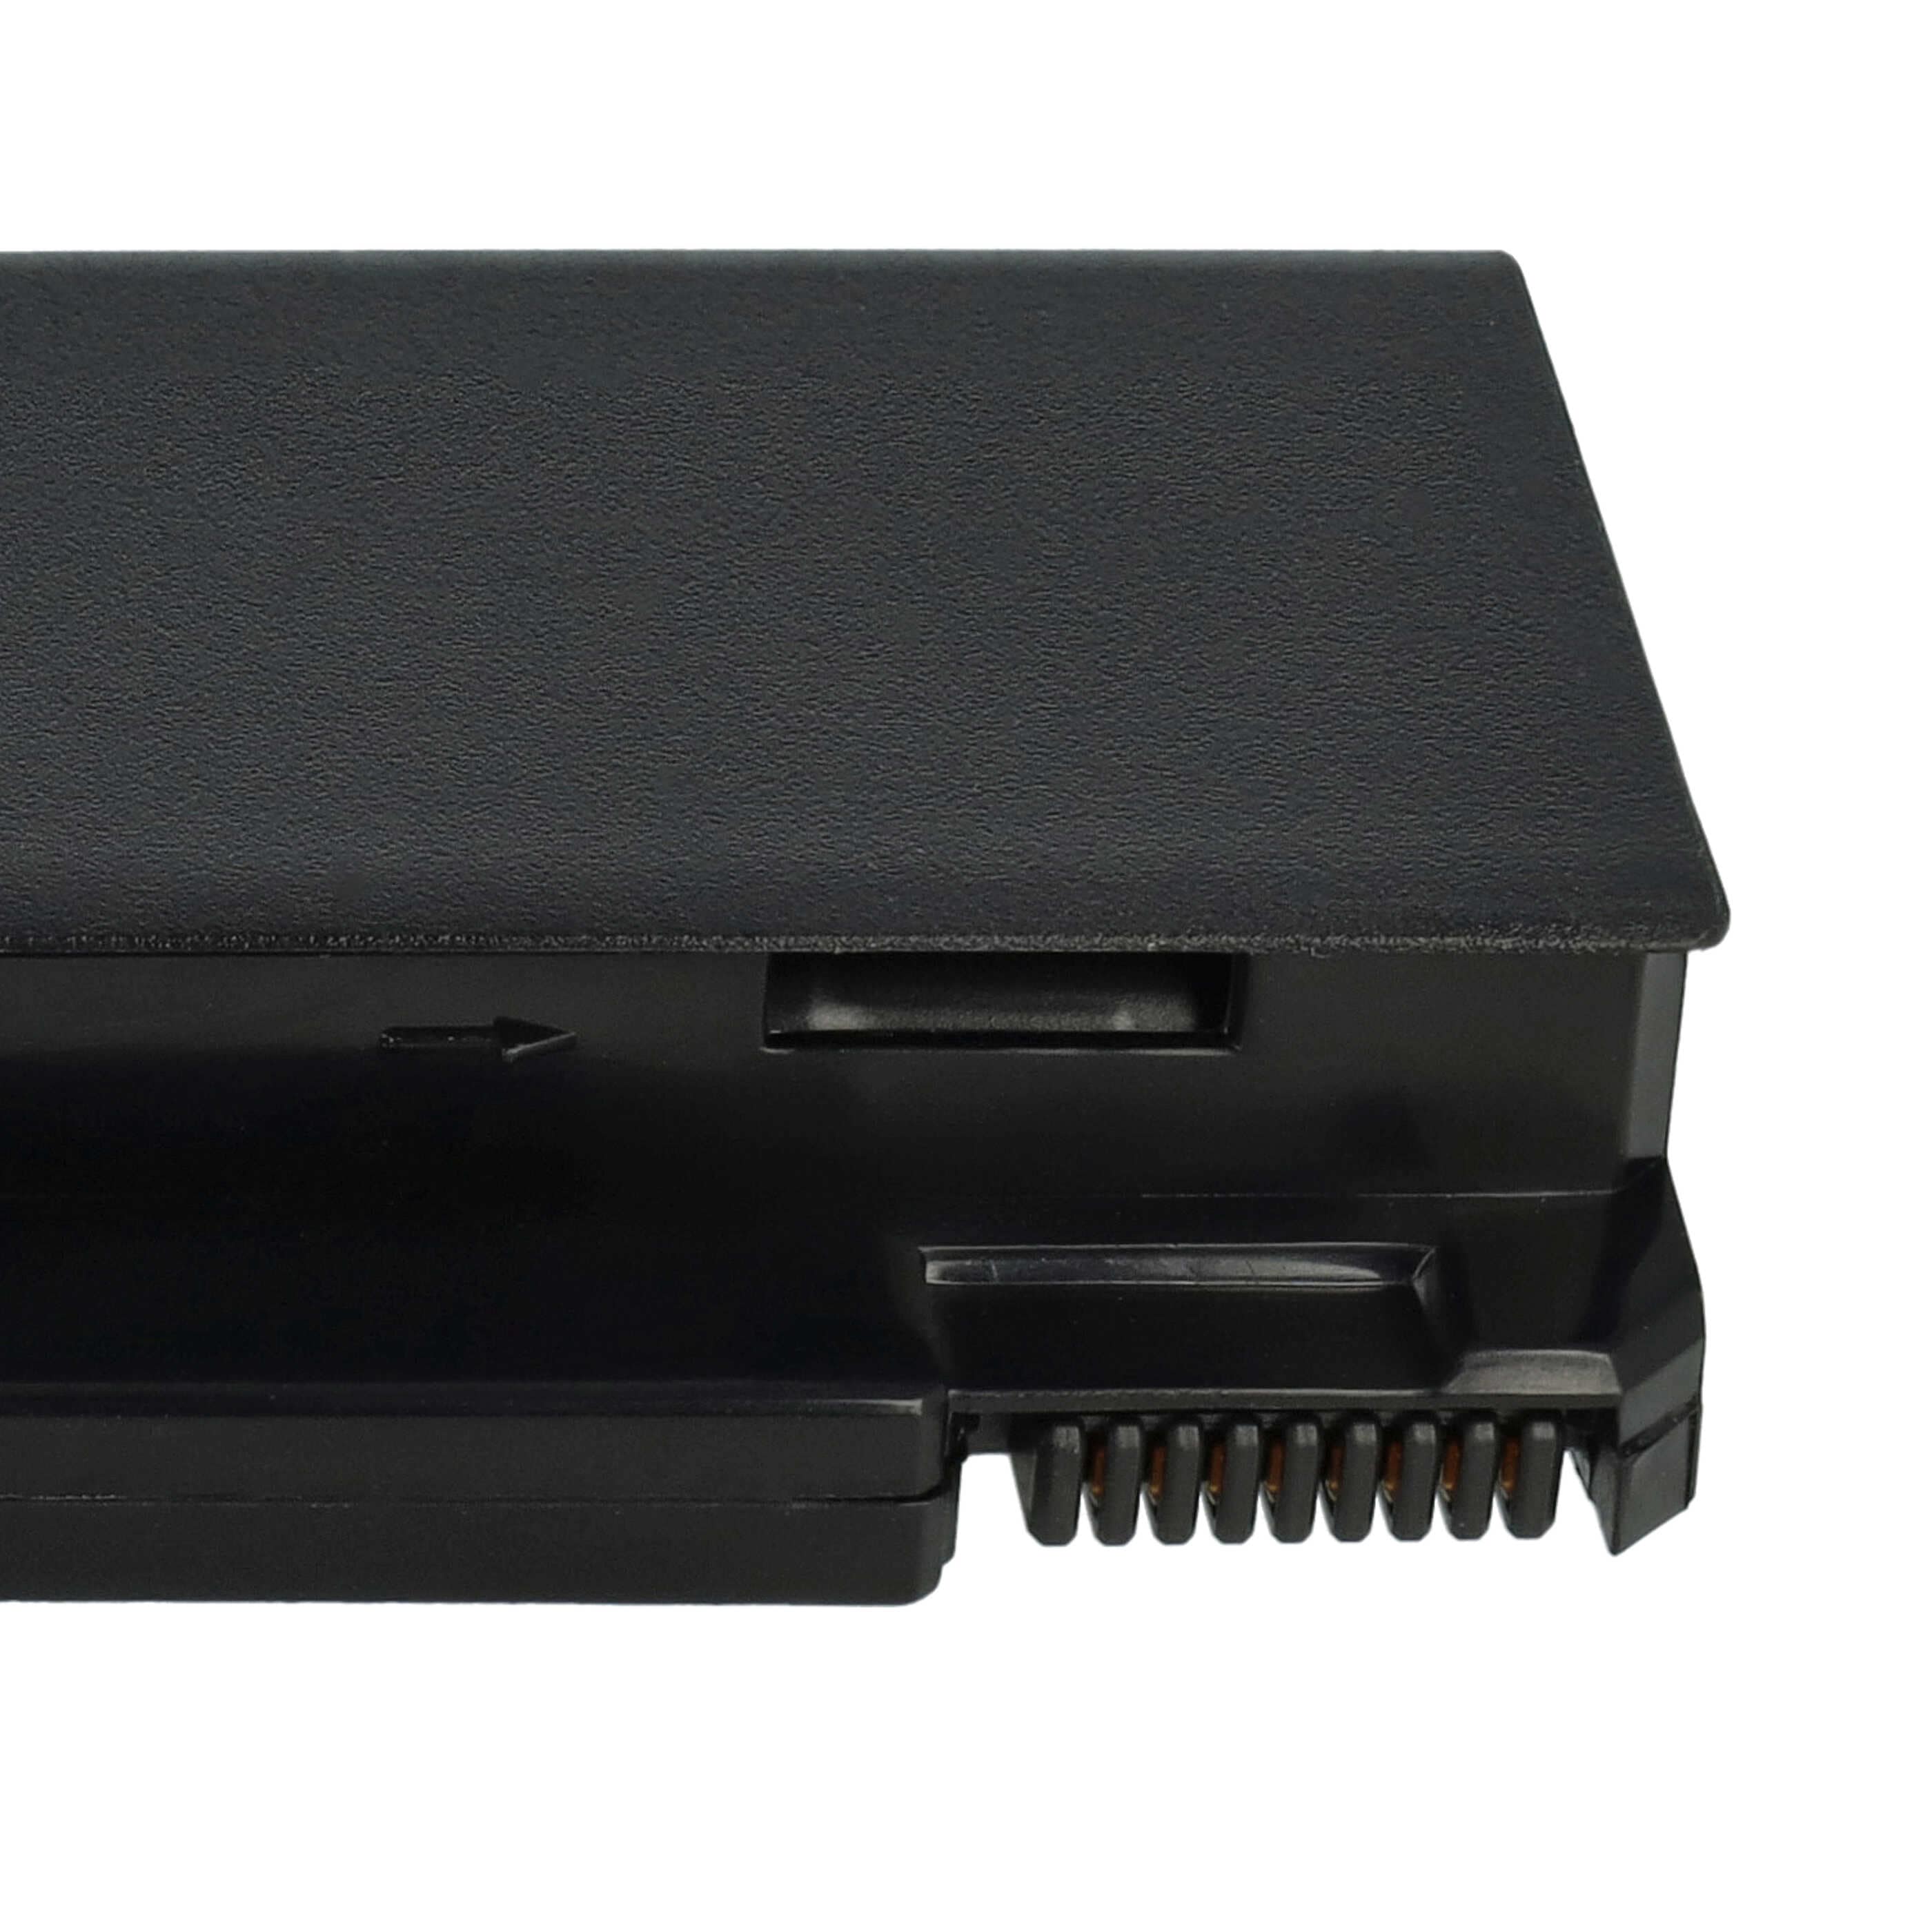 Akumulator do laptopa zamiennik HP 484786-001, 491173-543, HSTNN-144C-A - 6600 mAh 10,8 V Li-Ion, czarny